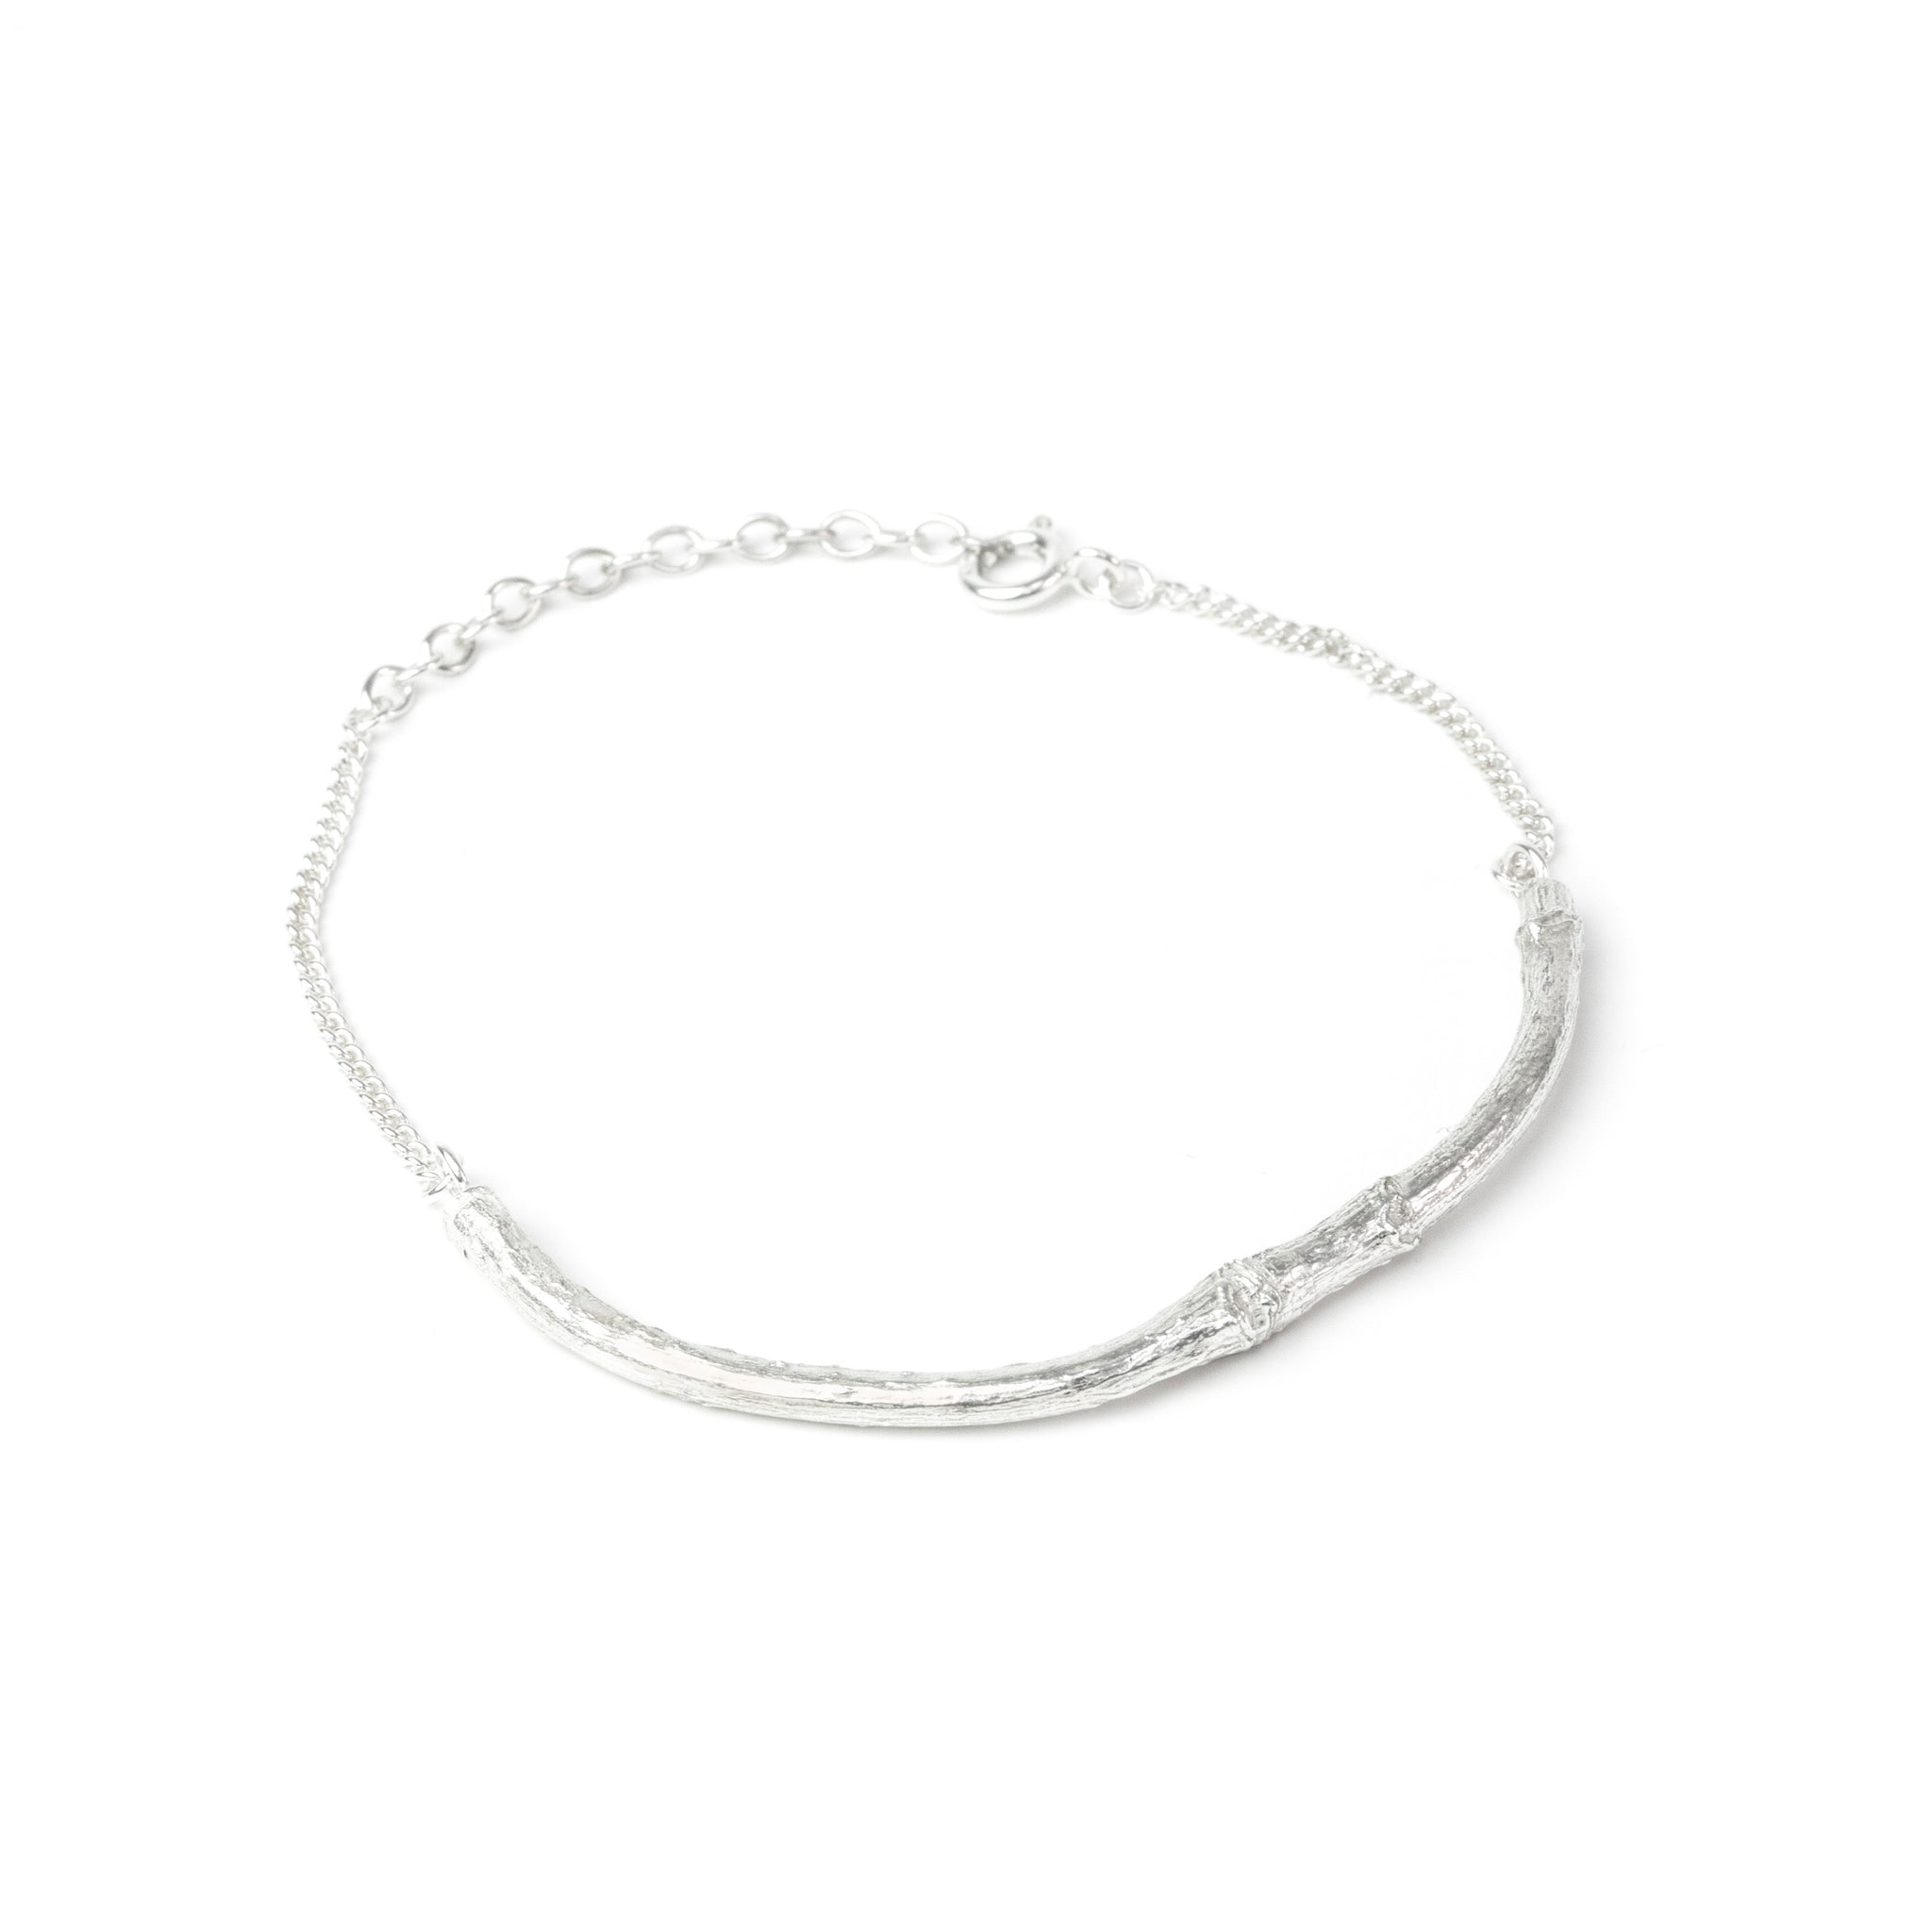 Silver Twig Bracelet on white background